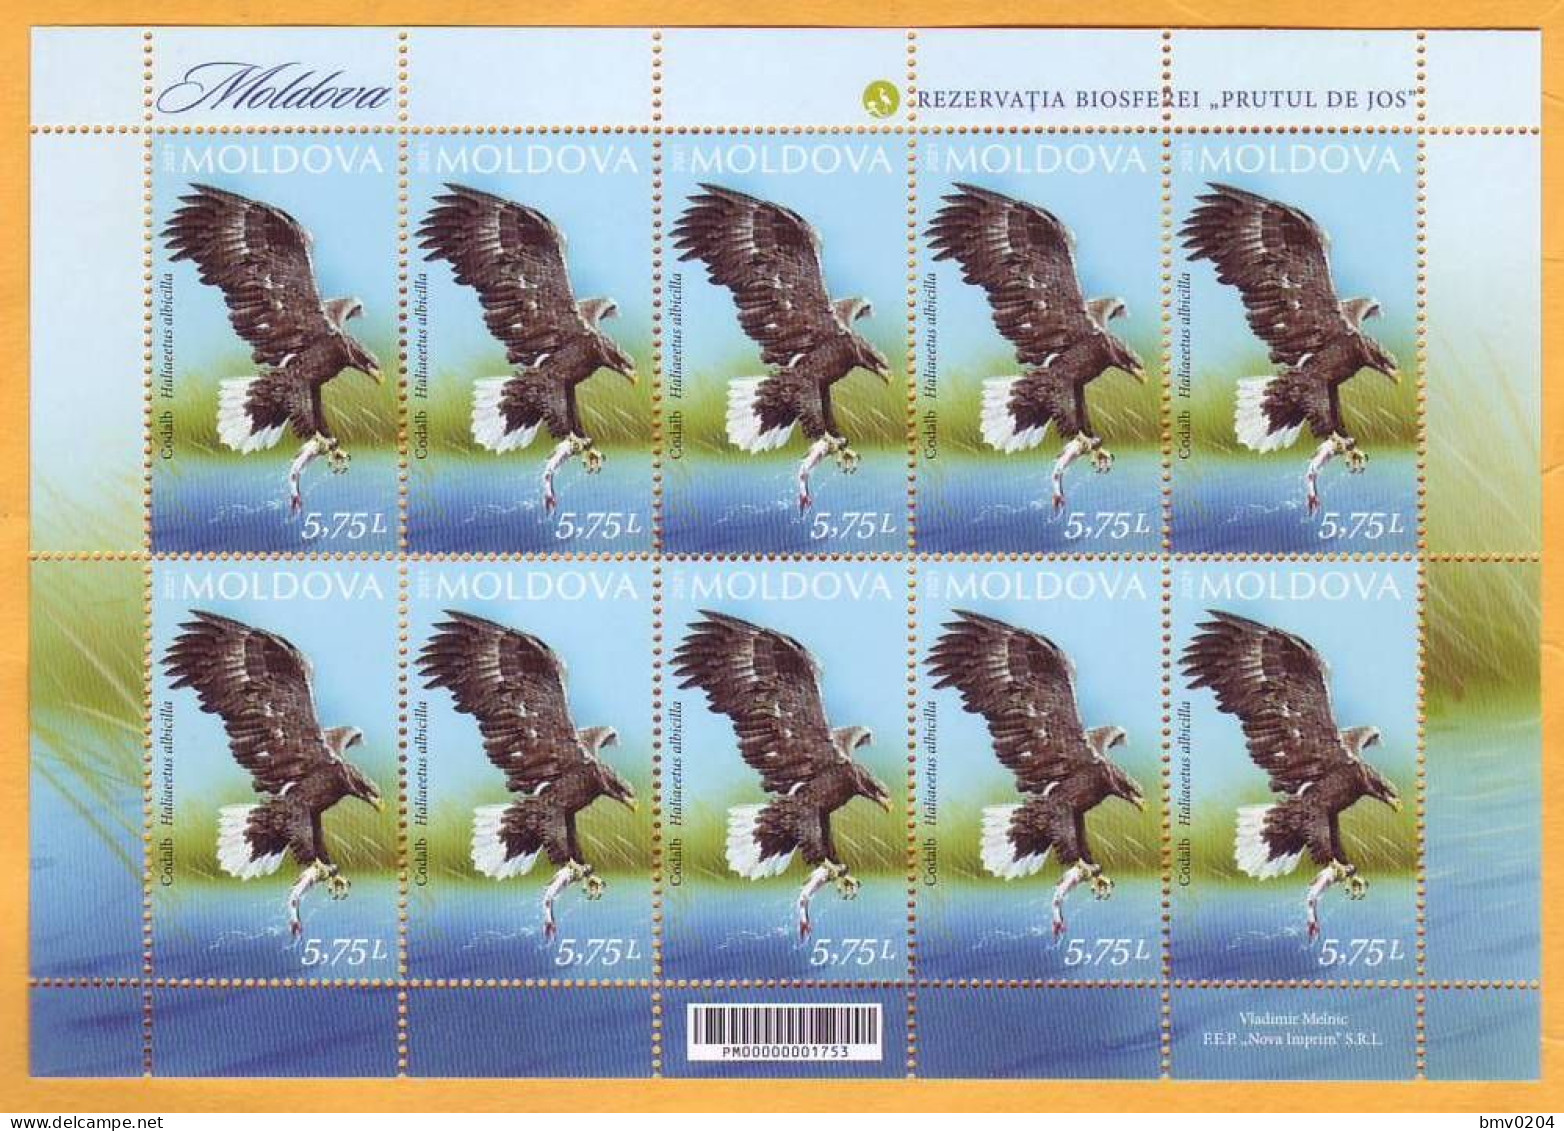 2021 Moldova Moldavie Moldau Romania  Sheet  Lower Prut ”Biosphere Reserve” Birds, Fauna Mint 5.75 - Moldavie